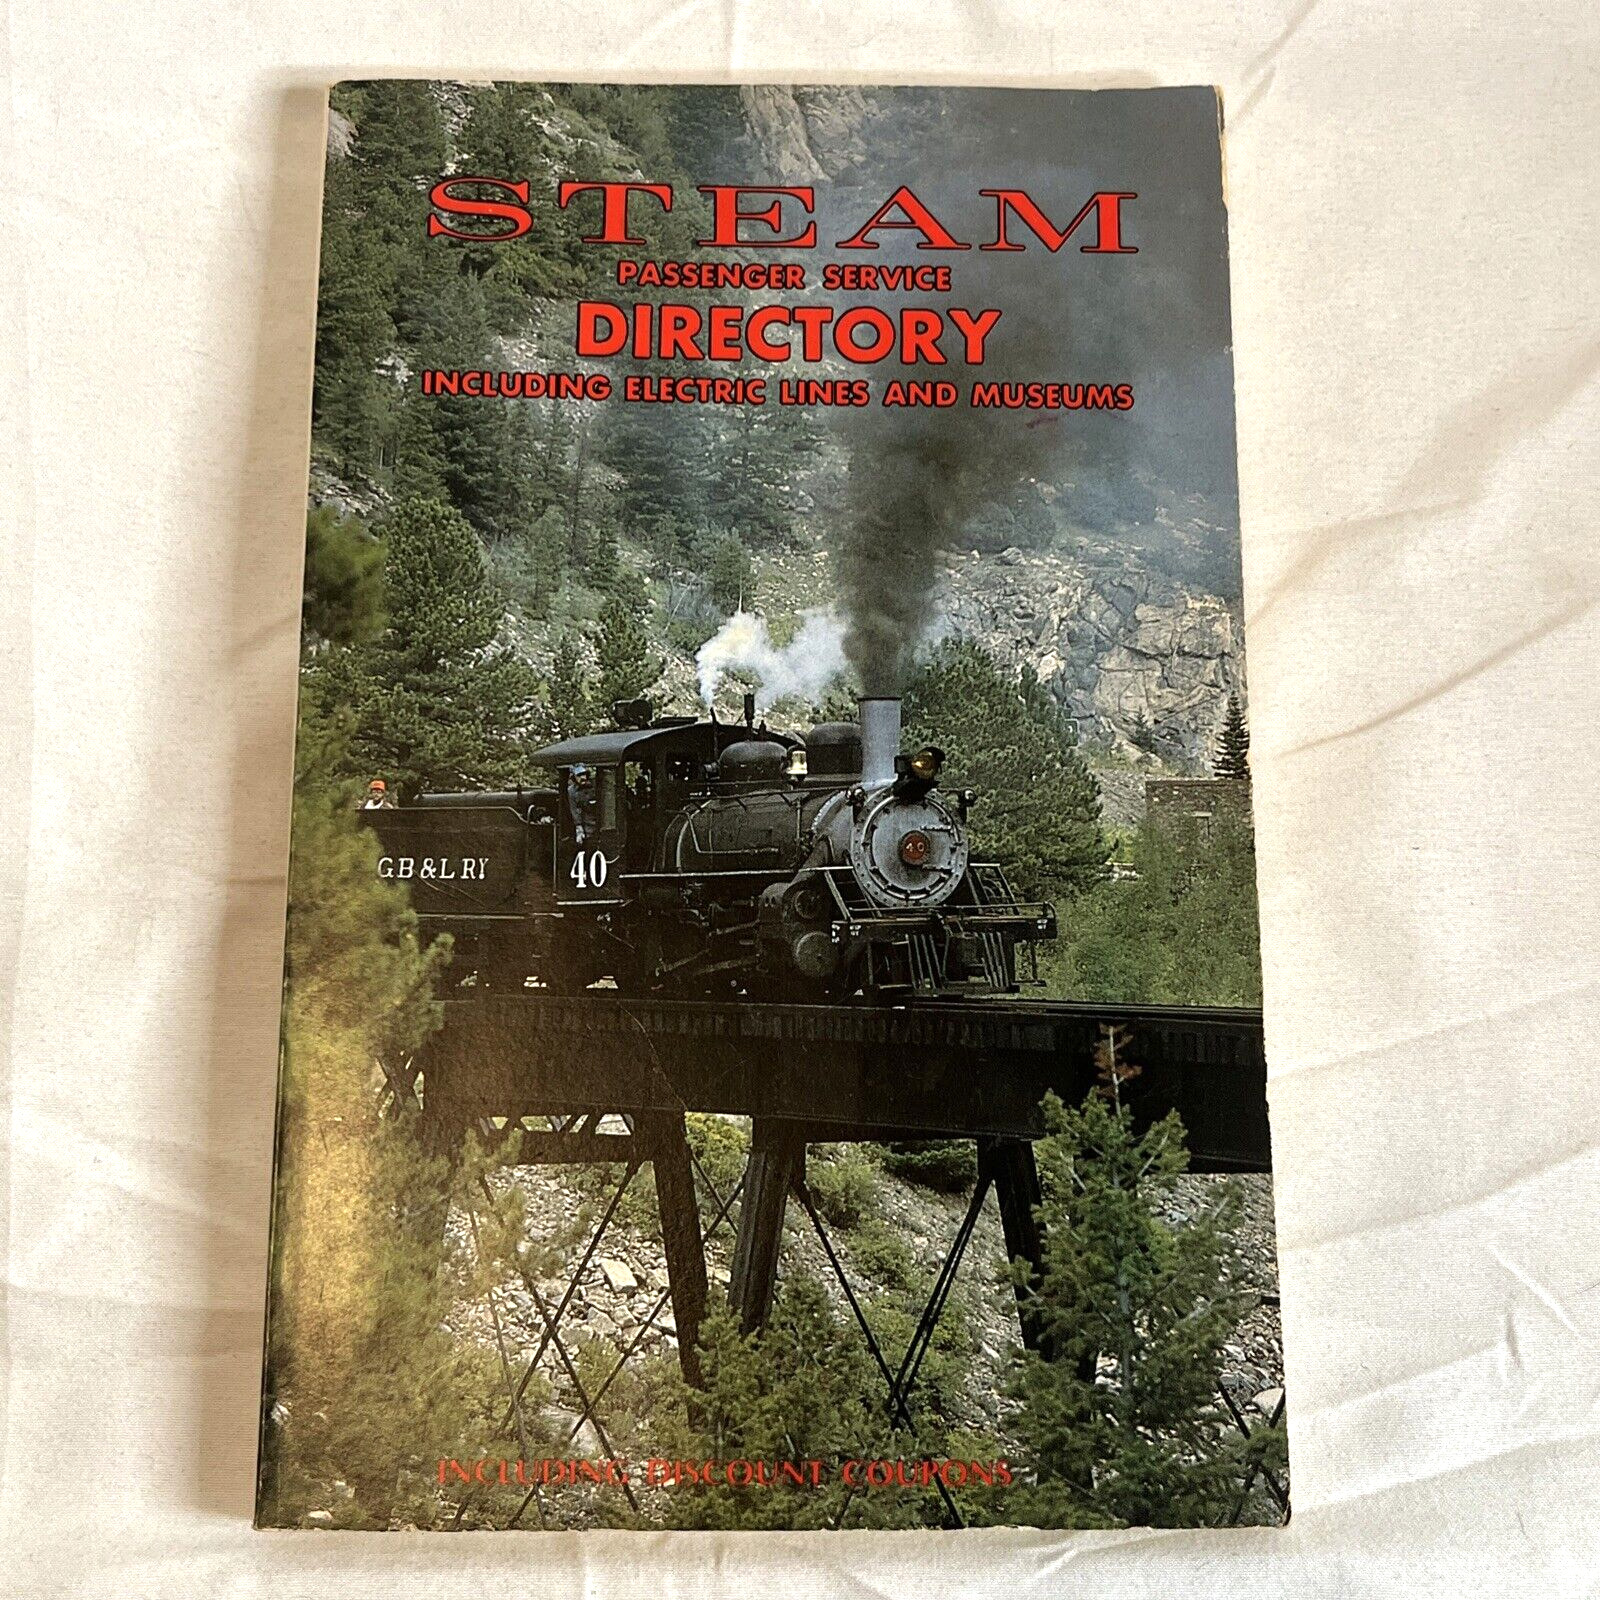 Steam Passenger Service Directory Book 1986 Empire State Railway Museum